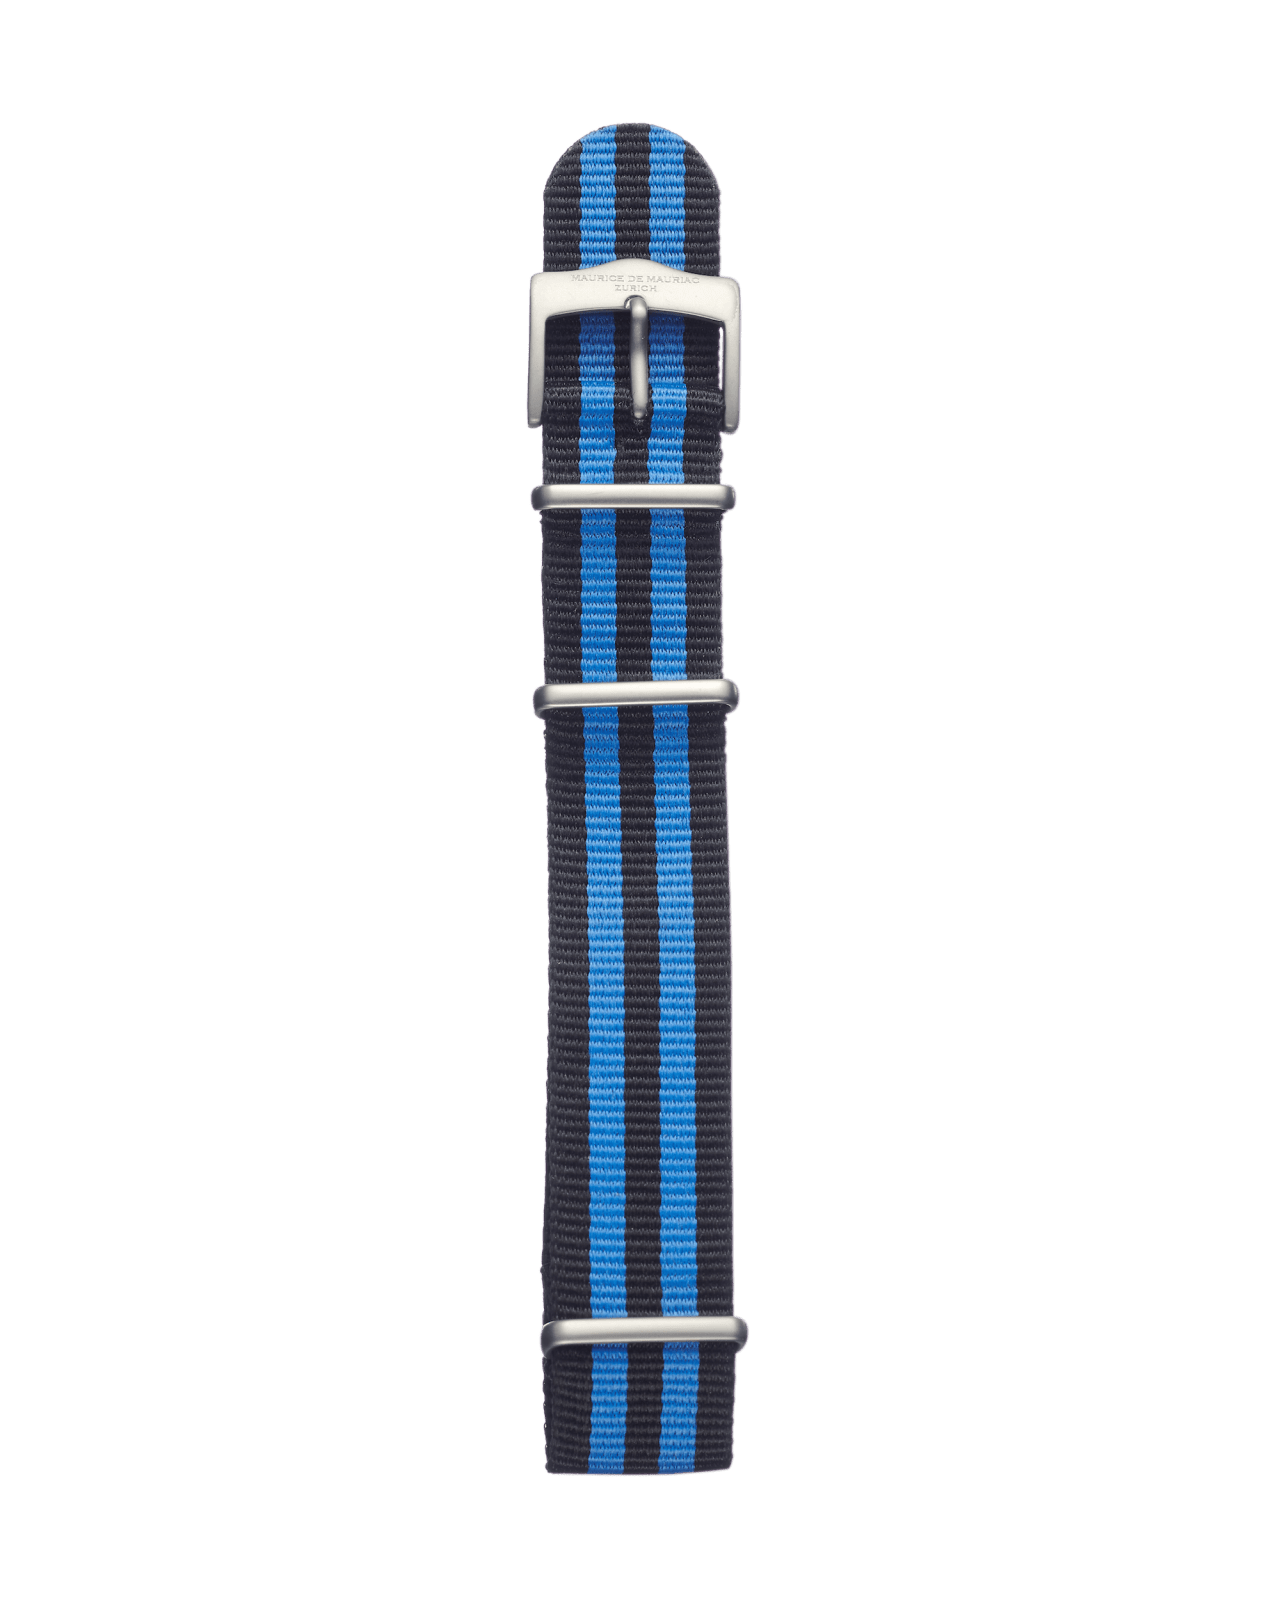 Textil Uhrenband in blau gestreift